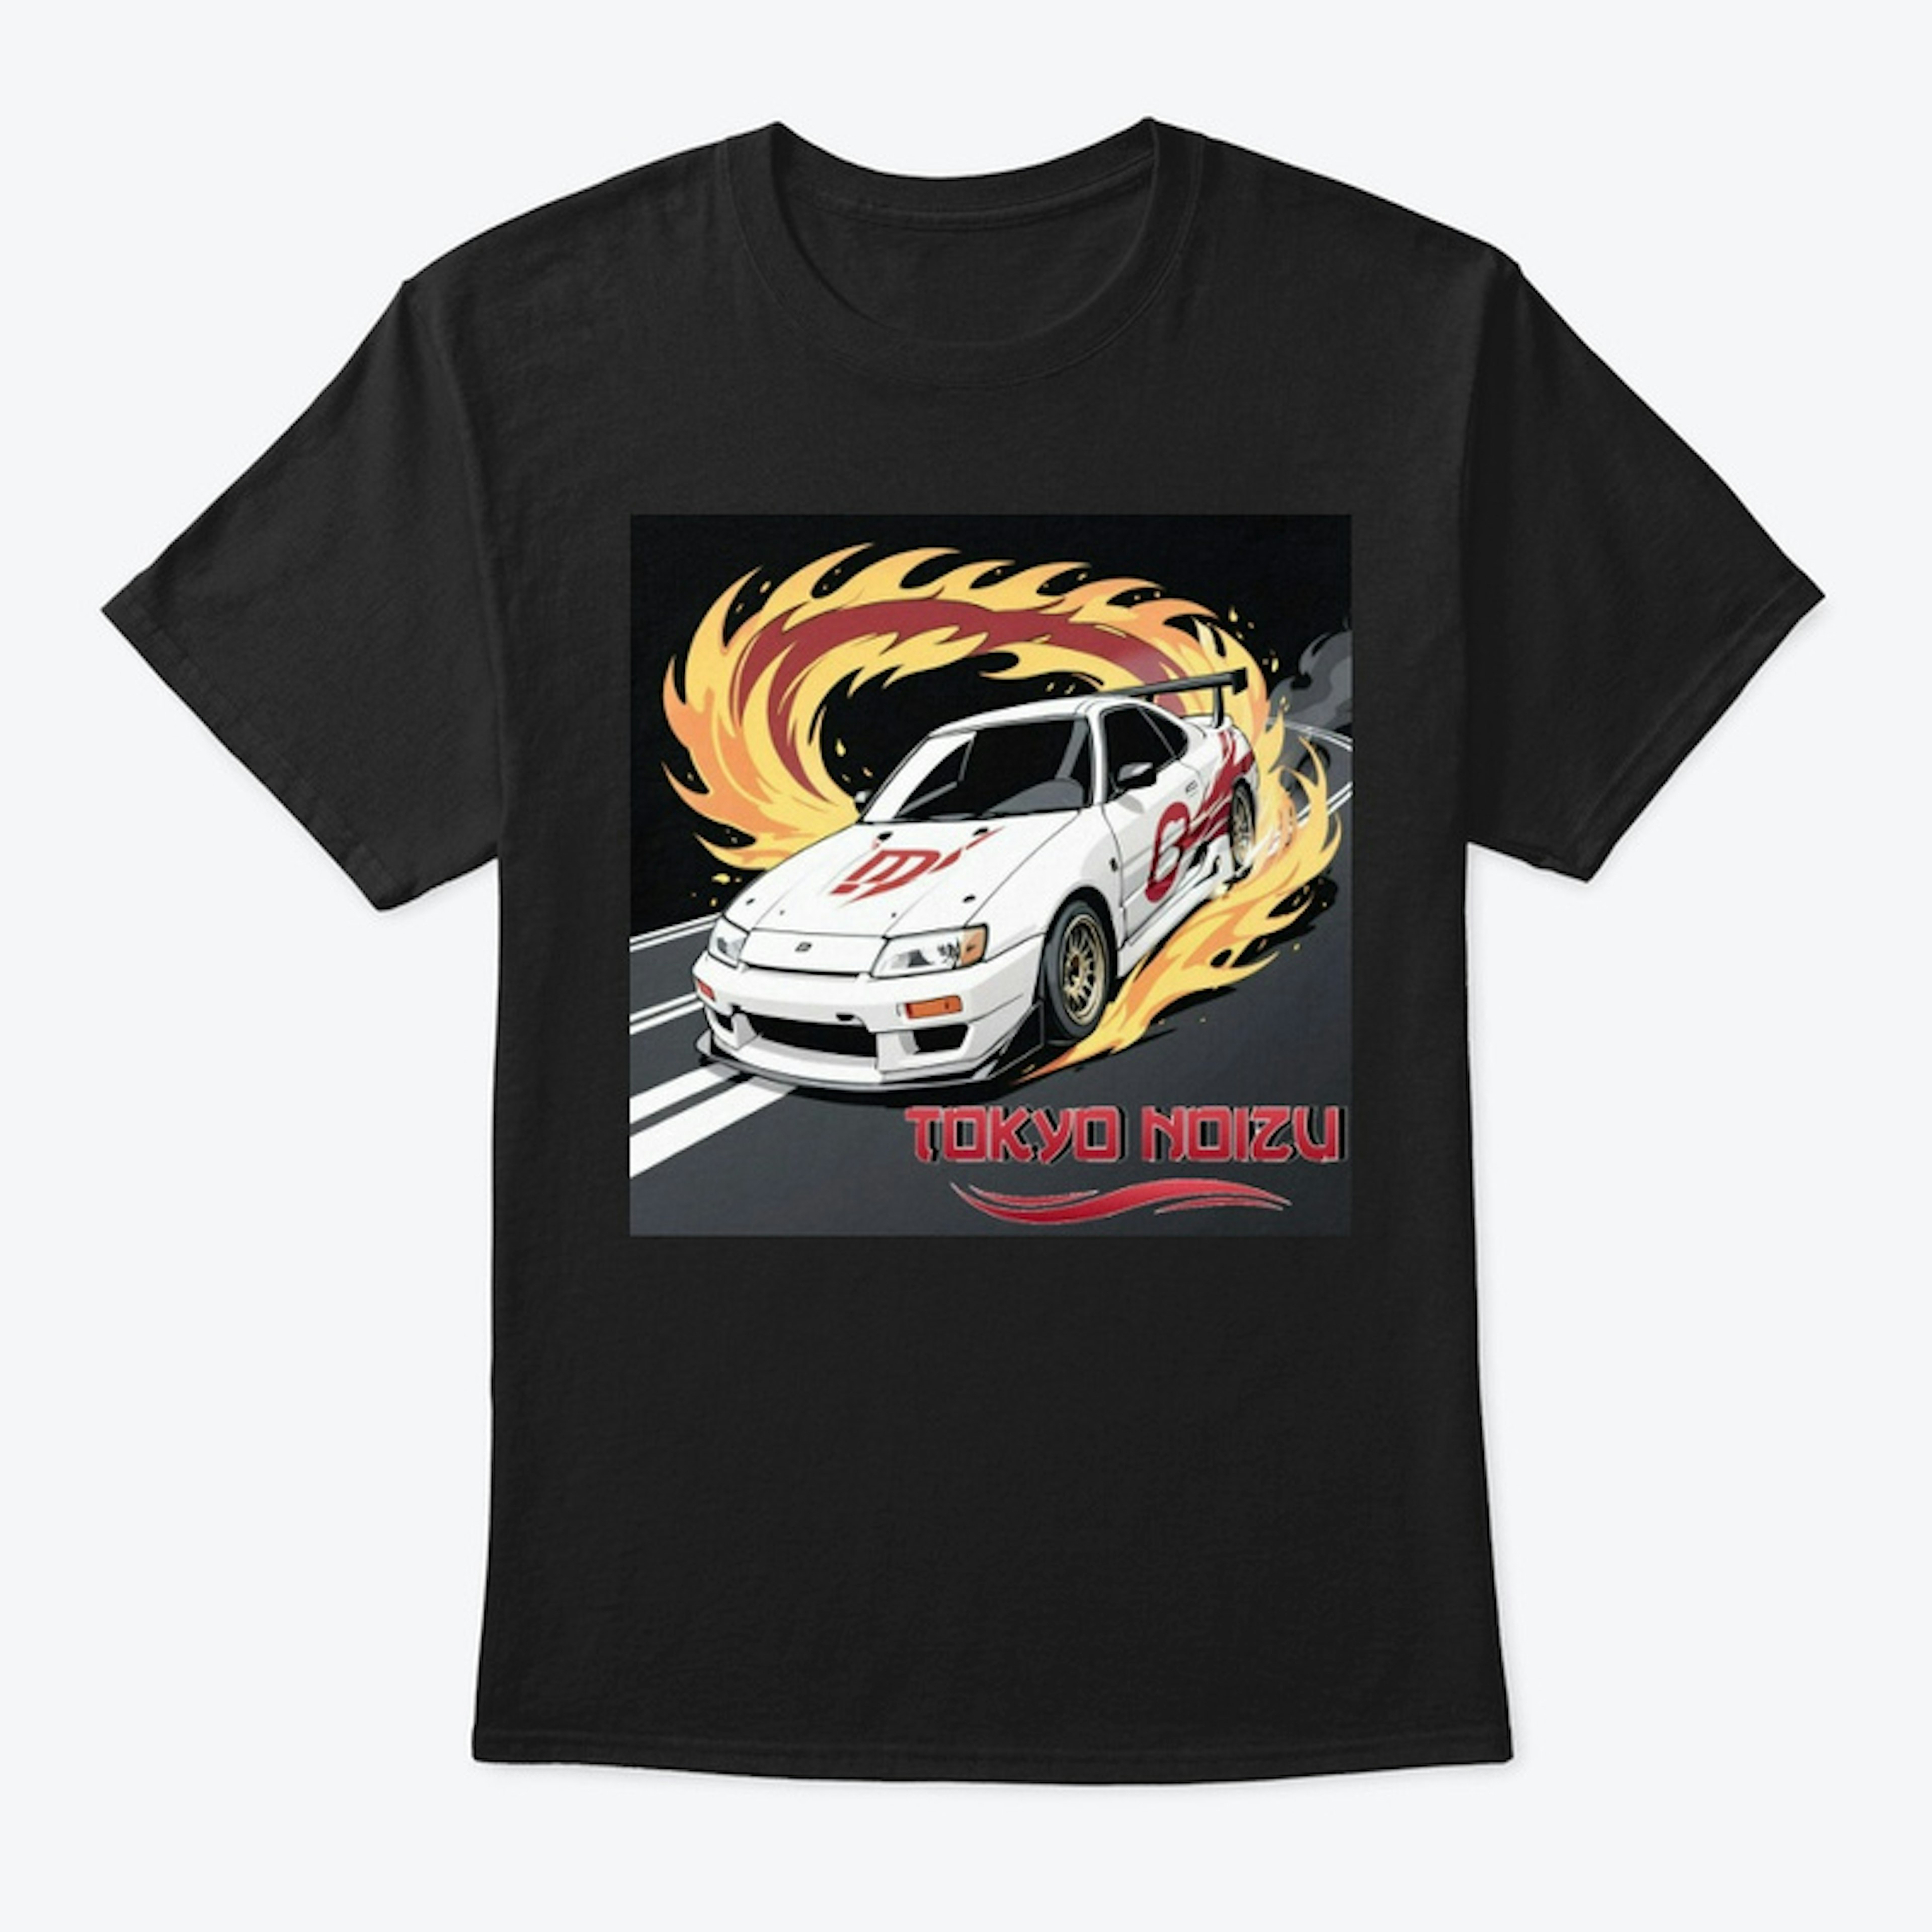 TOKYO NOIZU: Speed Racer